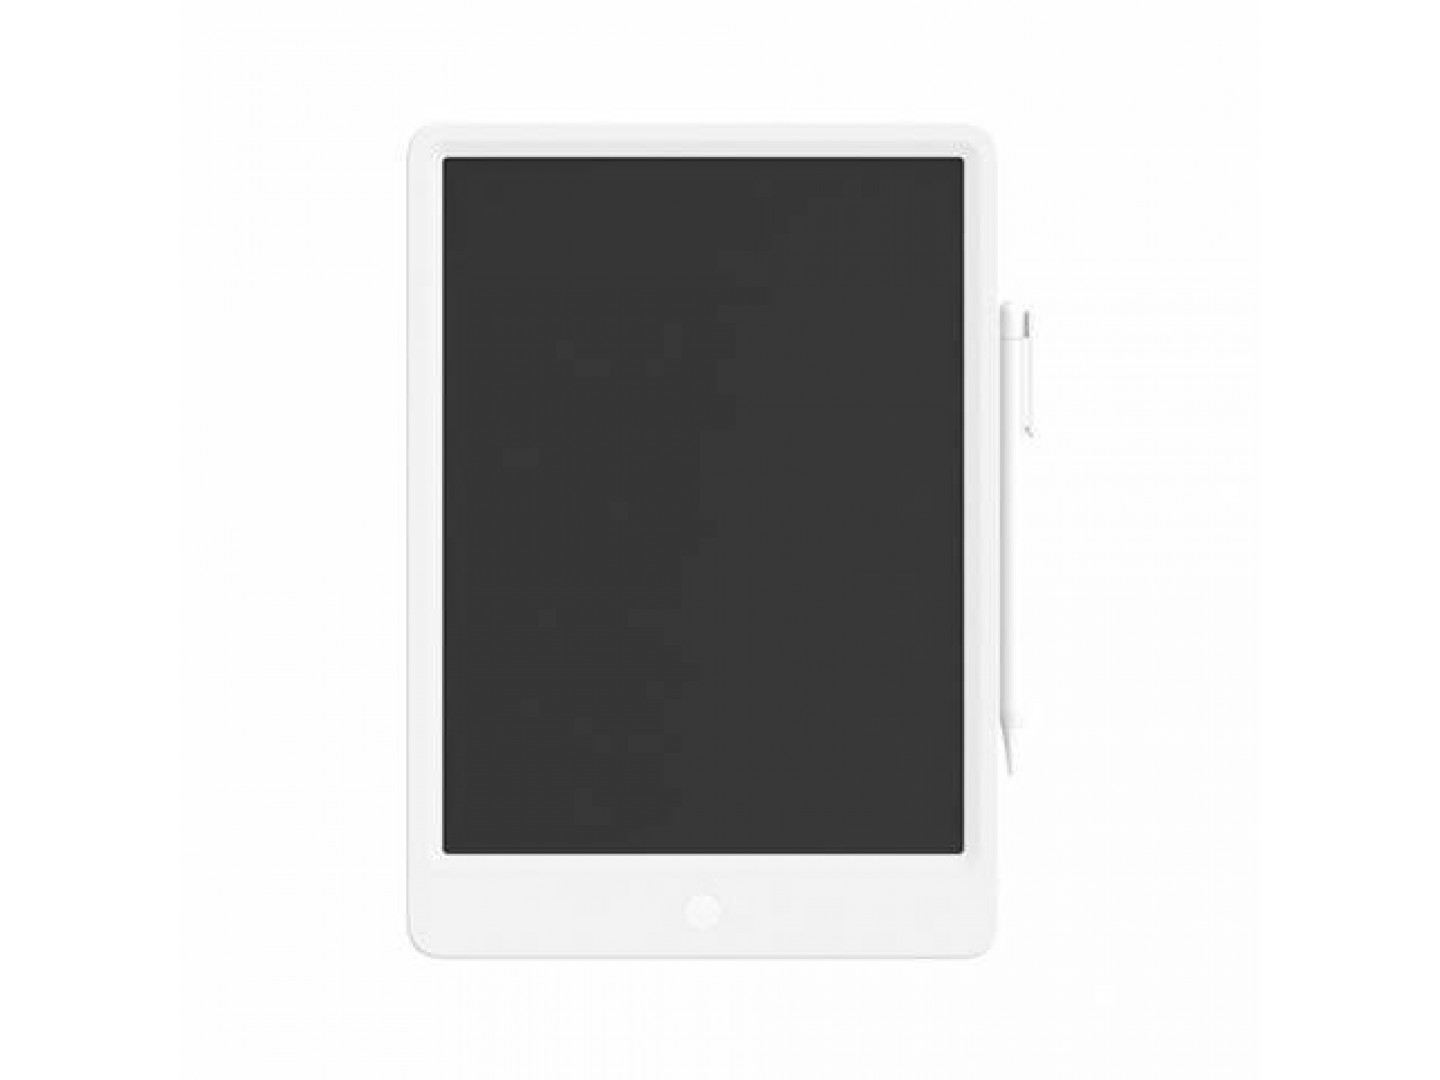 Xiaomi Mijia Lcd Writing Tablet 10